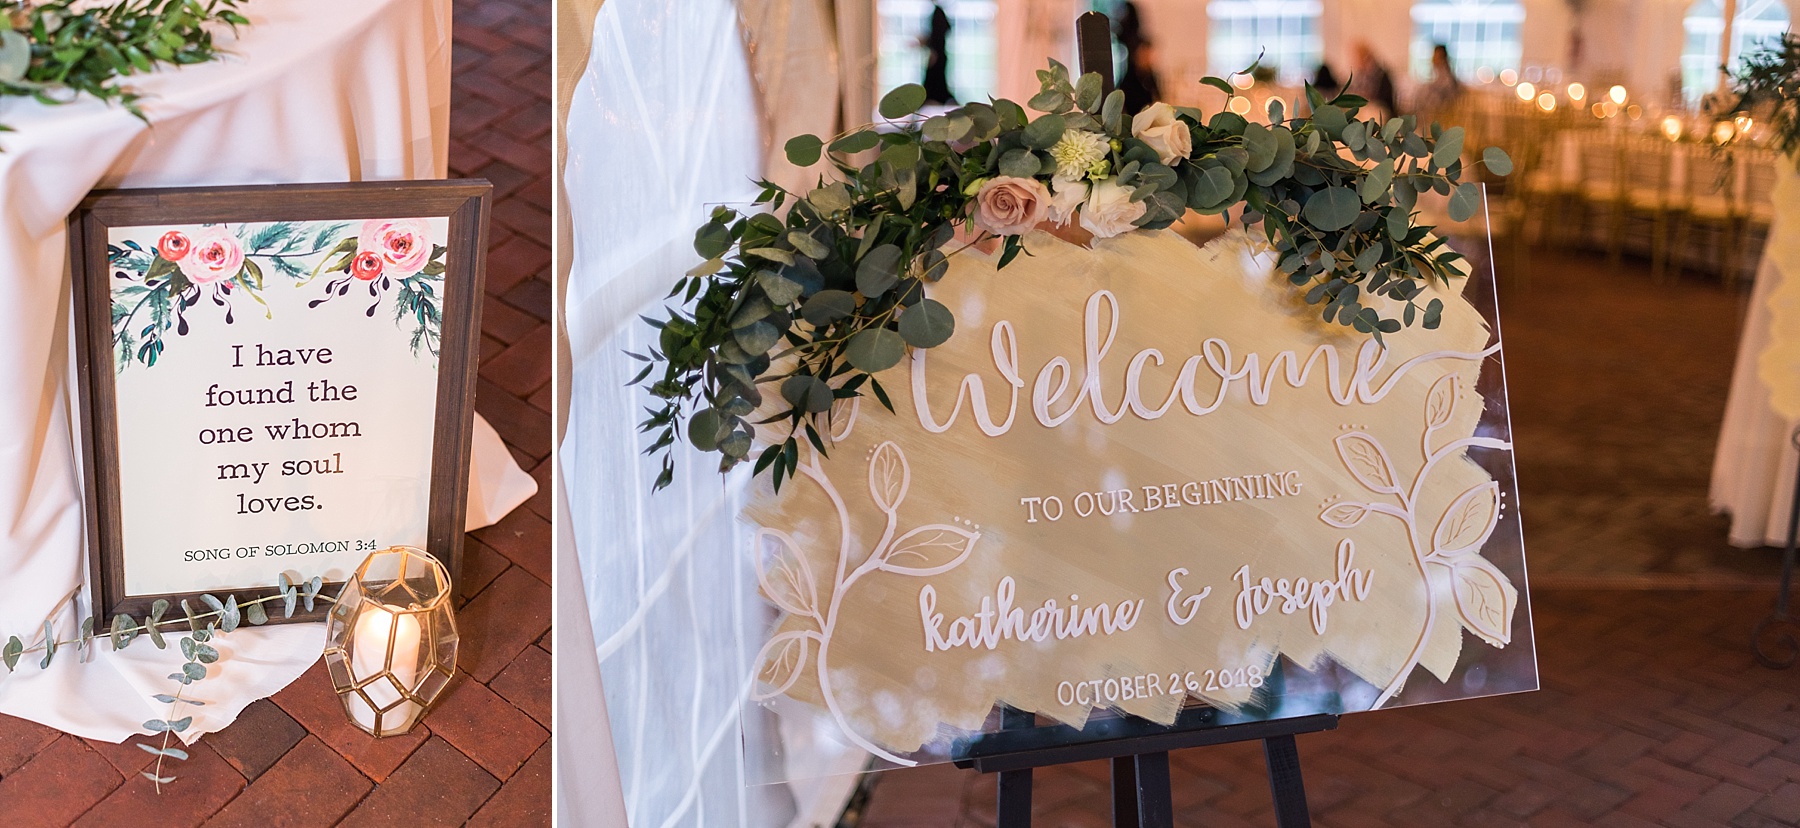 wedding reception at Belmont Manor by Alexandra Mandato Photography